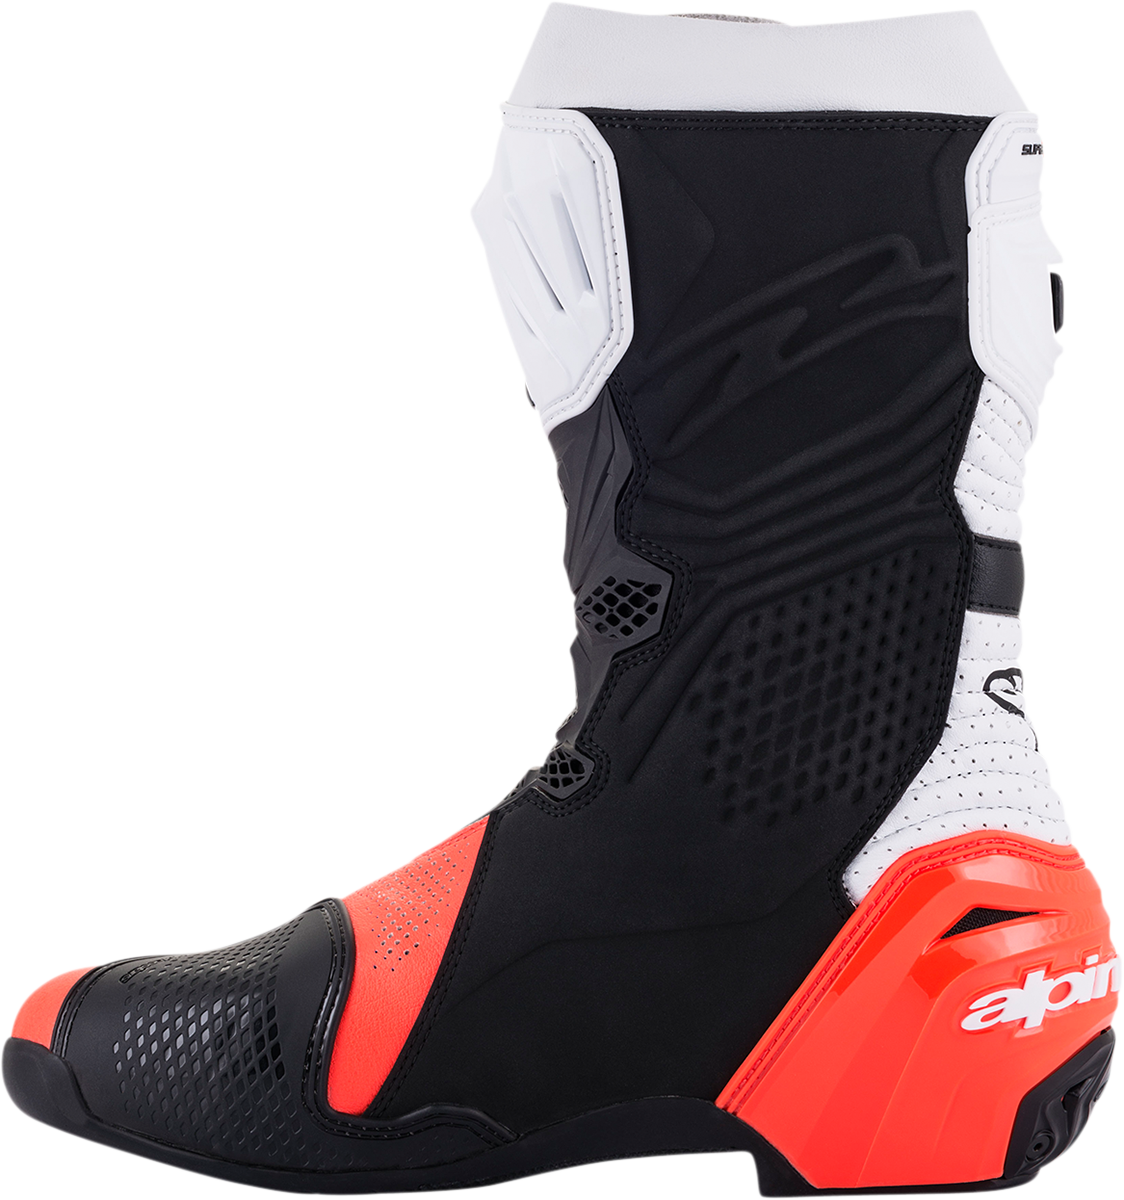 ALPINESTARS Supertech V Boots - Black/Fluo Red/White - US 6 / EU 39 2220121-124-39